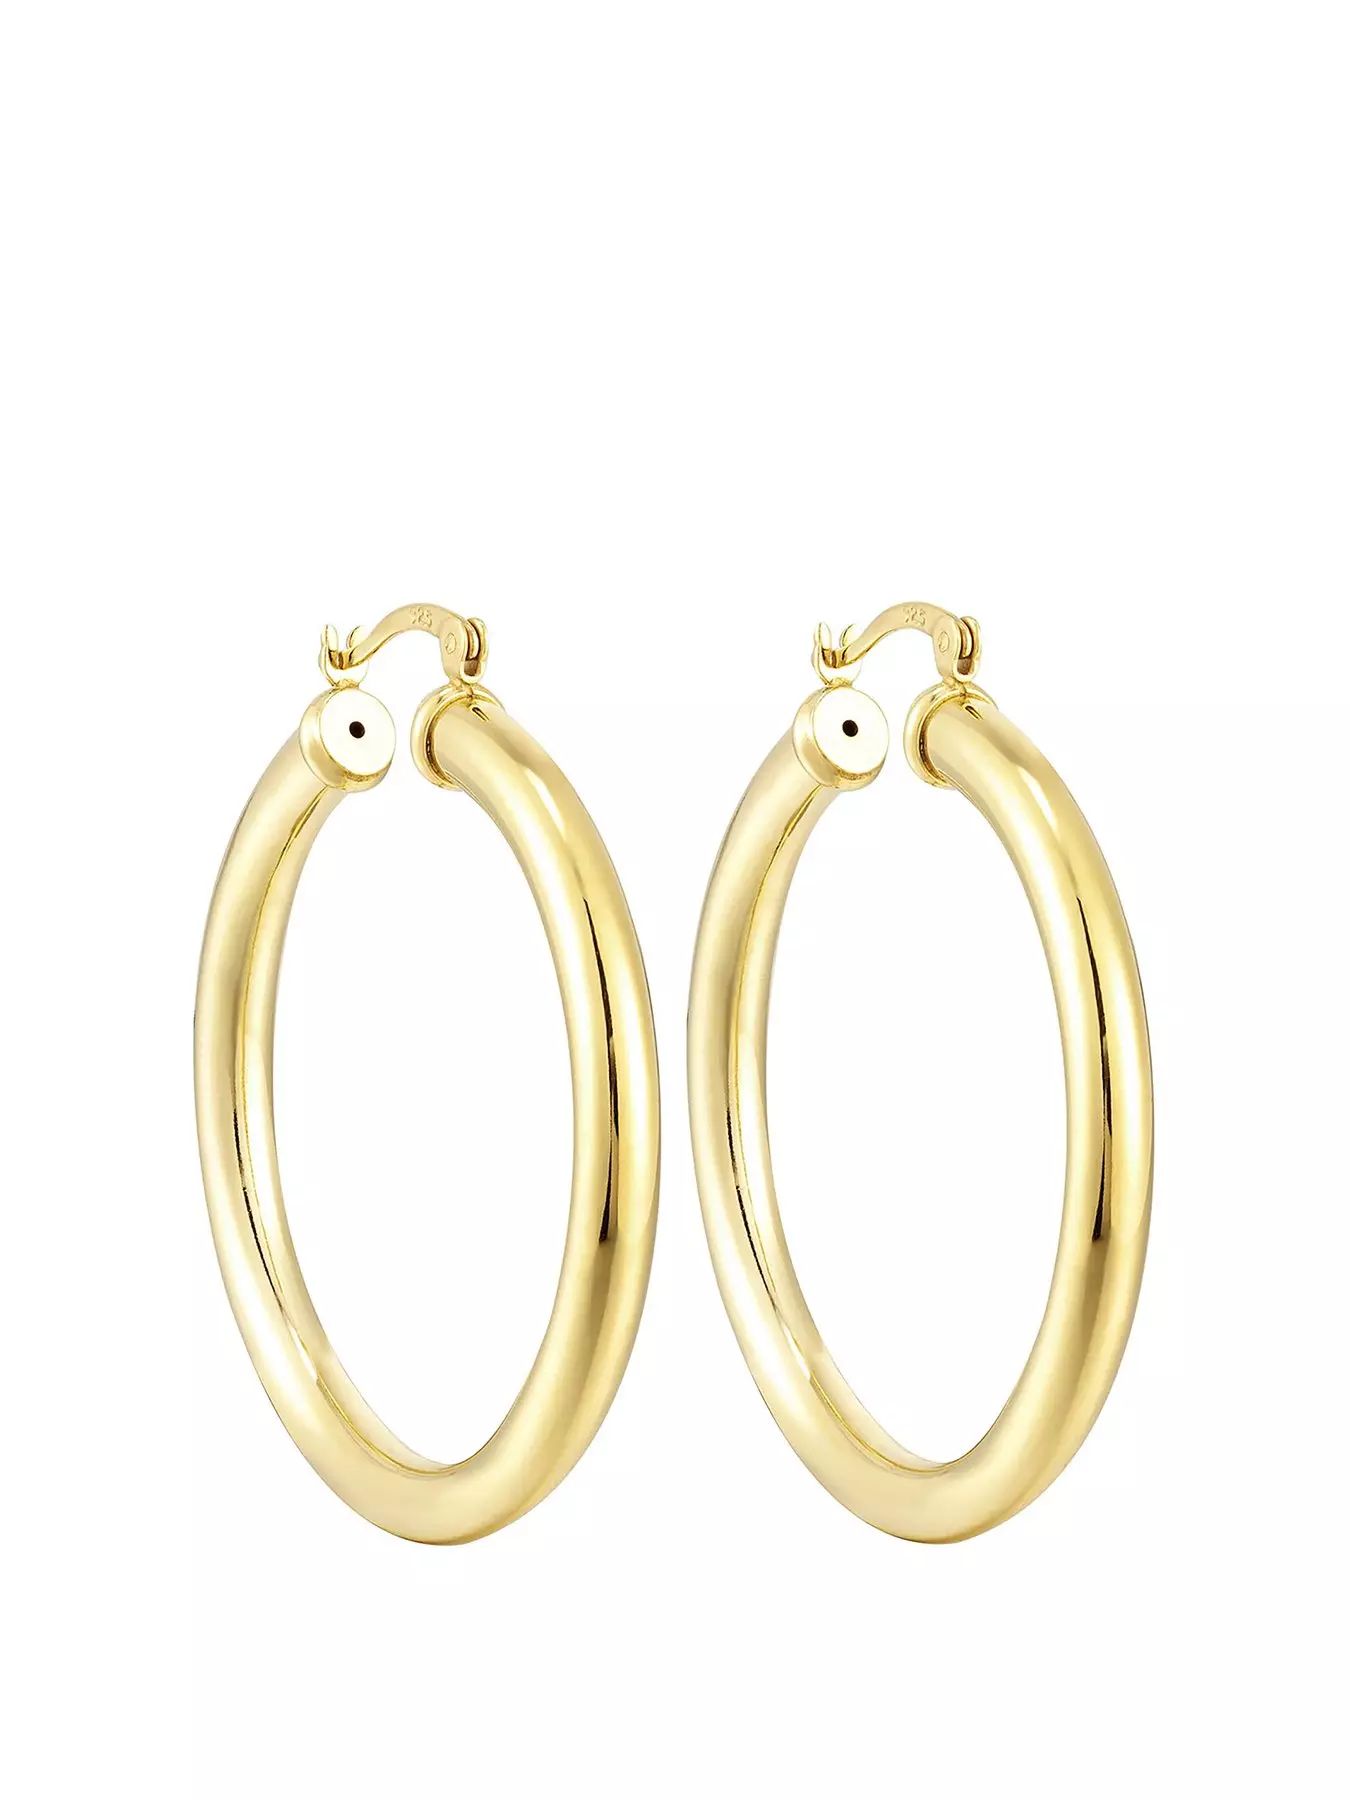  14K Gold Jumbo Earring Back Premium Extra-Jumbo Swirl 10mm  1-pair : Arts, Crafts & Sewing